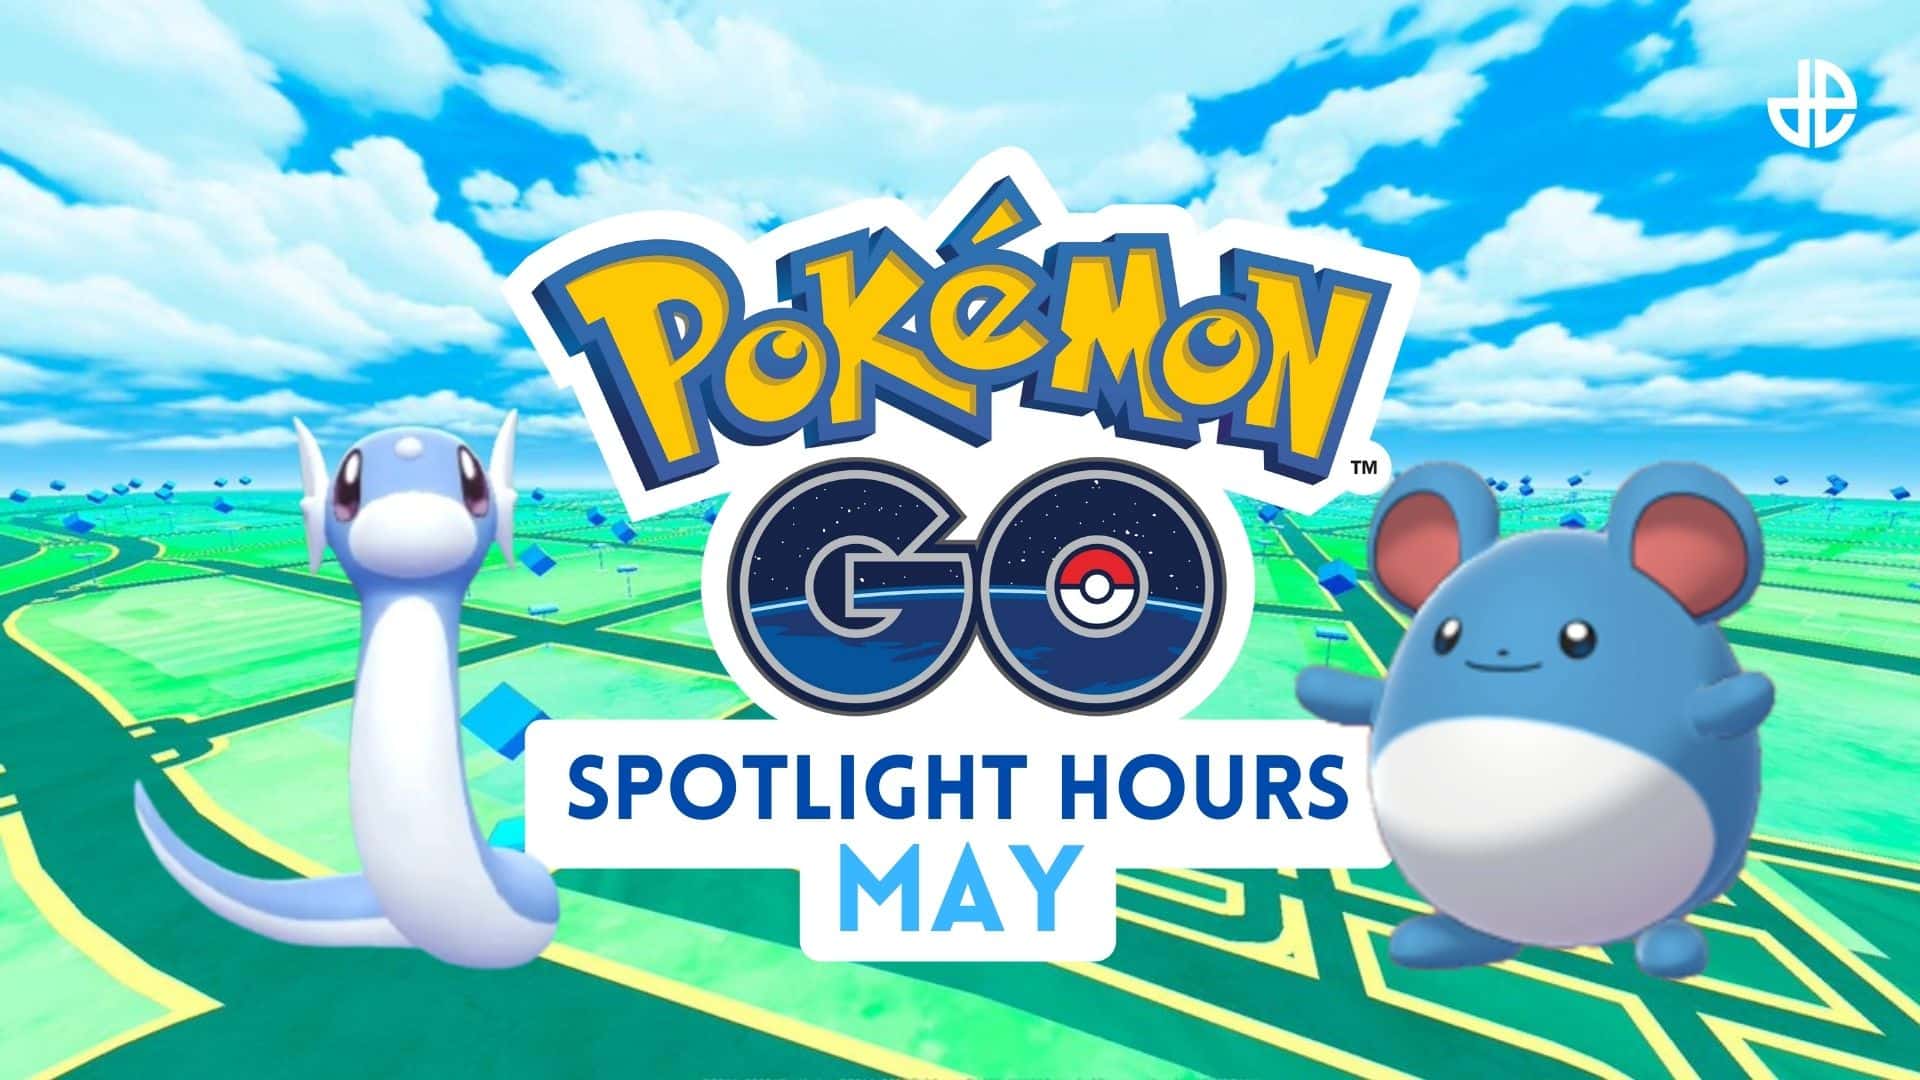 Pokemon Go Spotlight Hours for may 2021